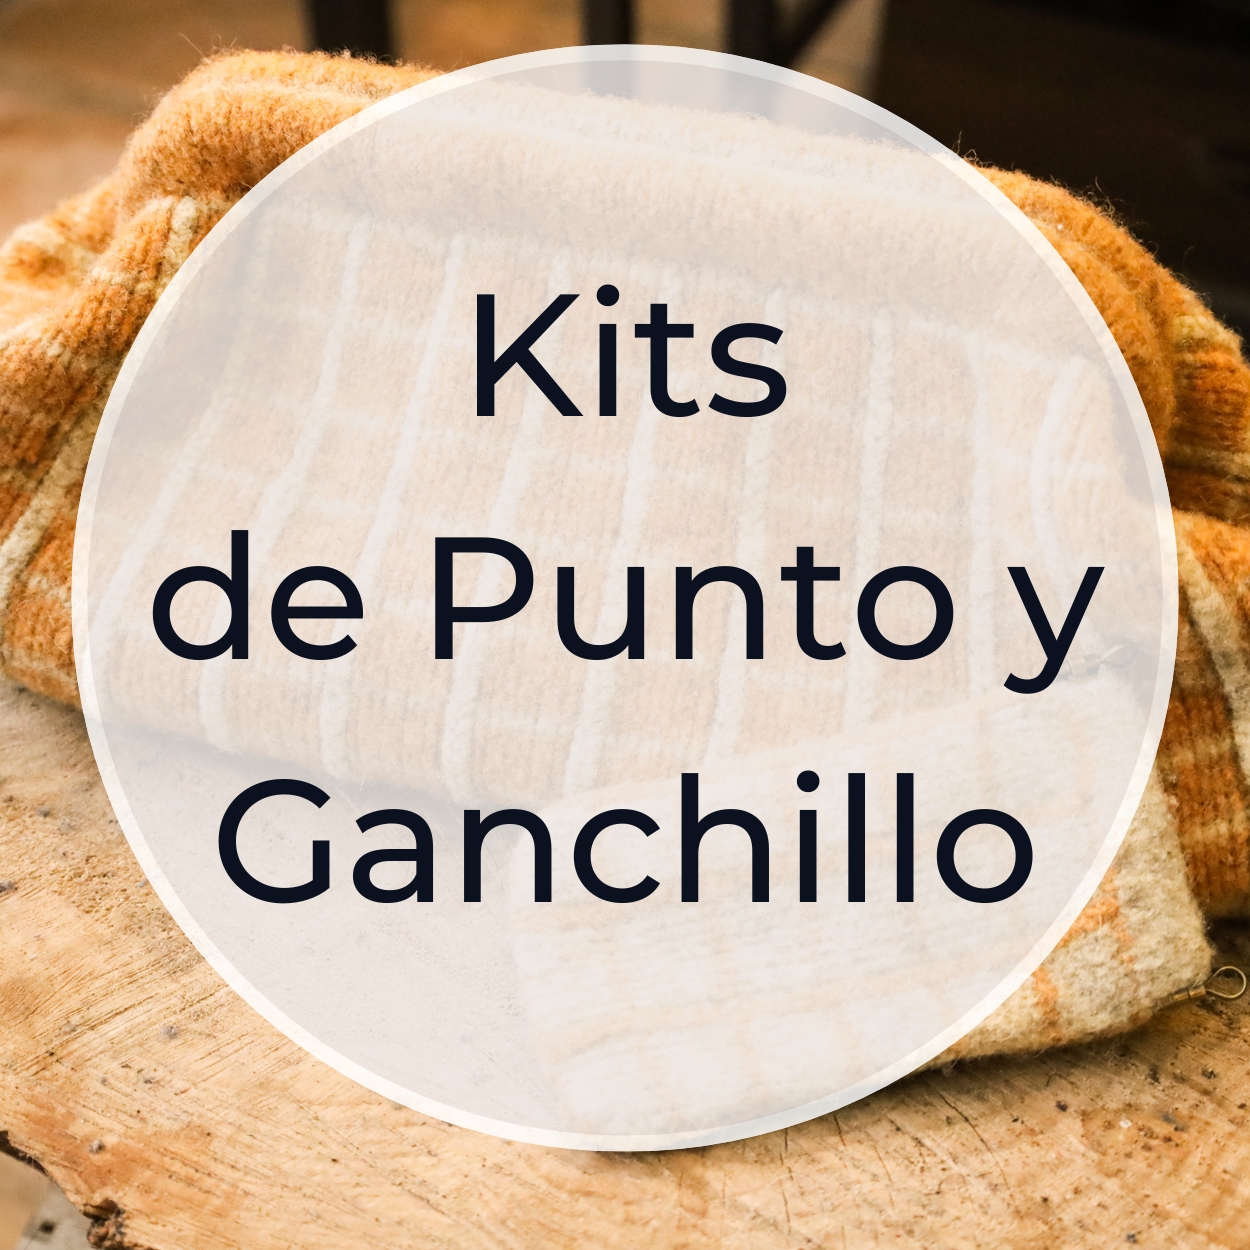 Kits de Punto y Ganchillo